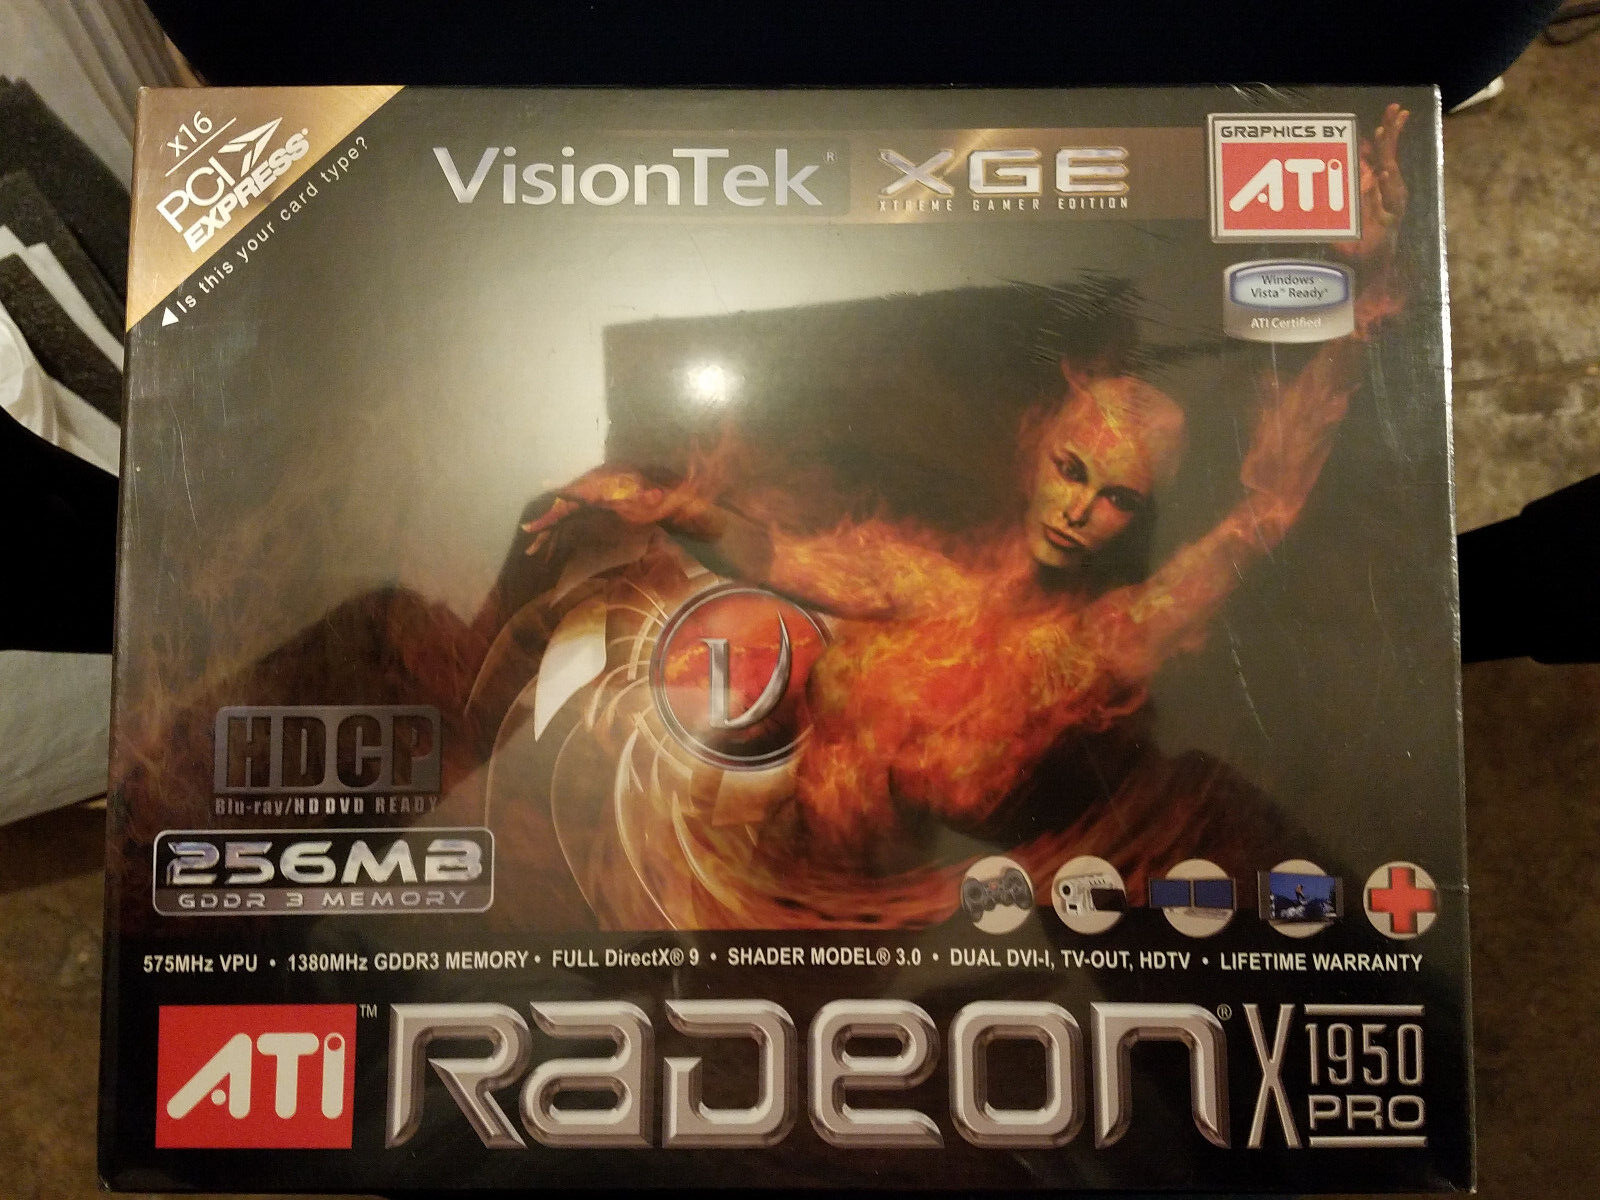 VisionTek ATI Radeon X1950PRO x16 PCIE 256MB GDDR3 XGE Video Card